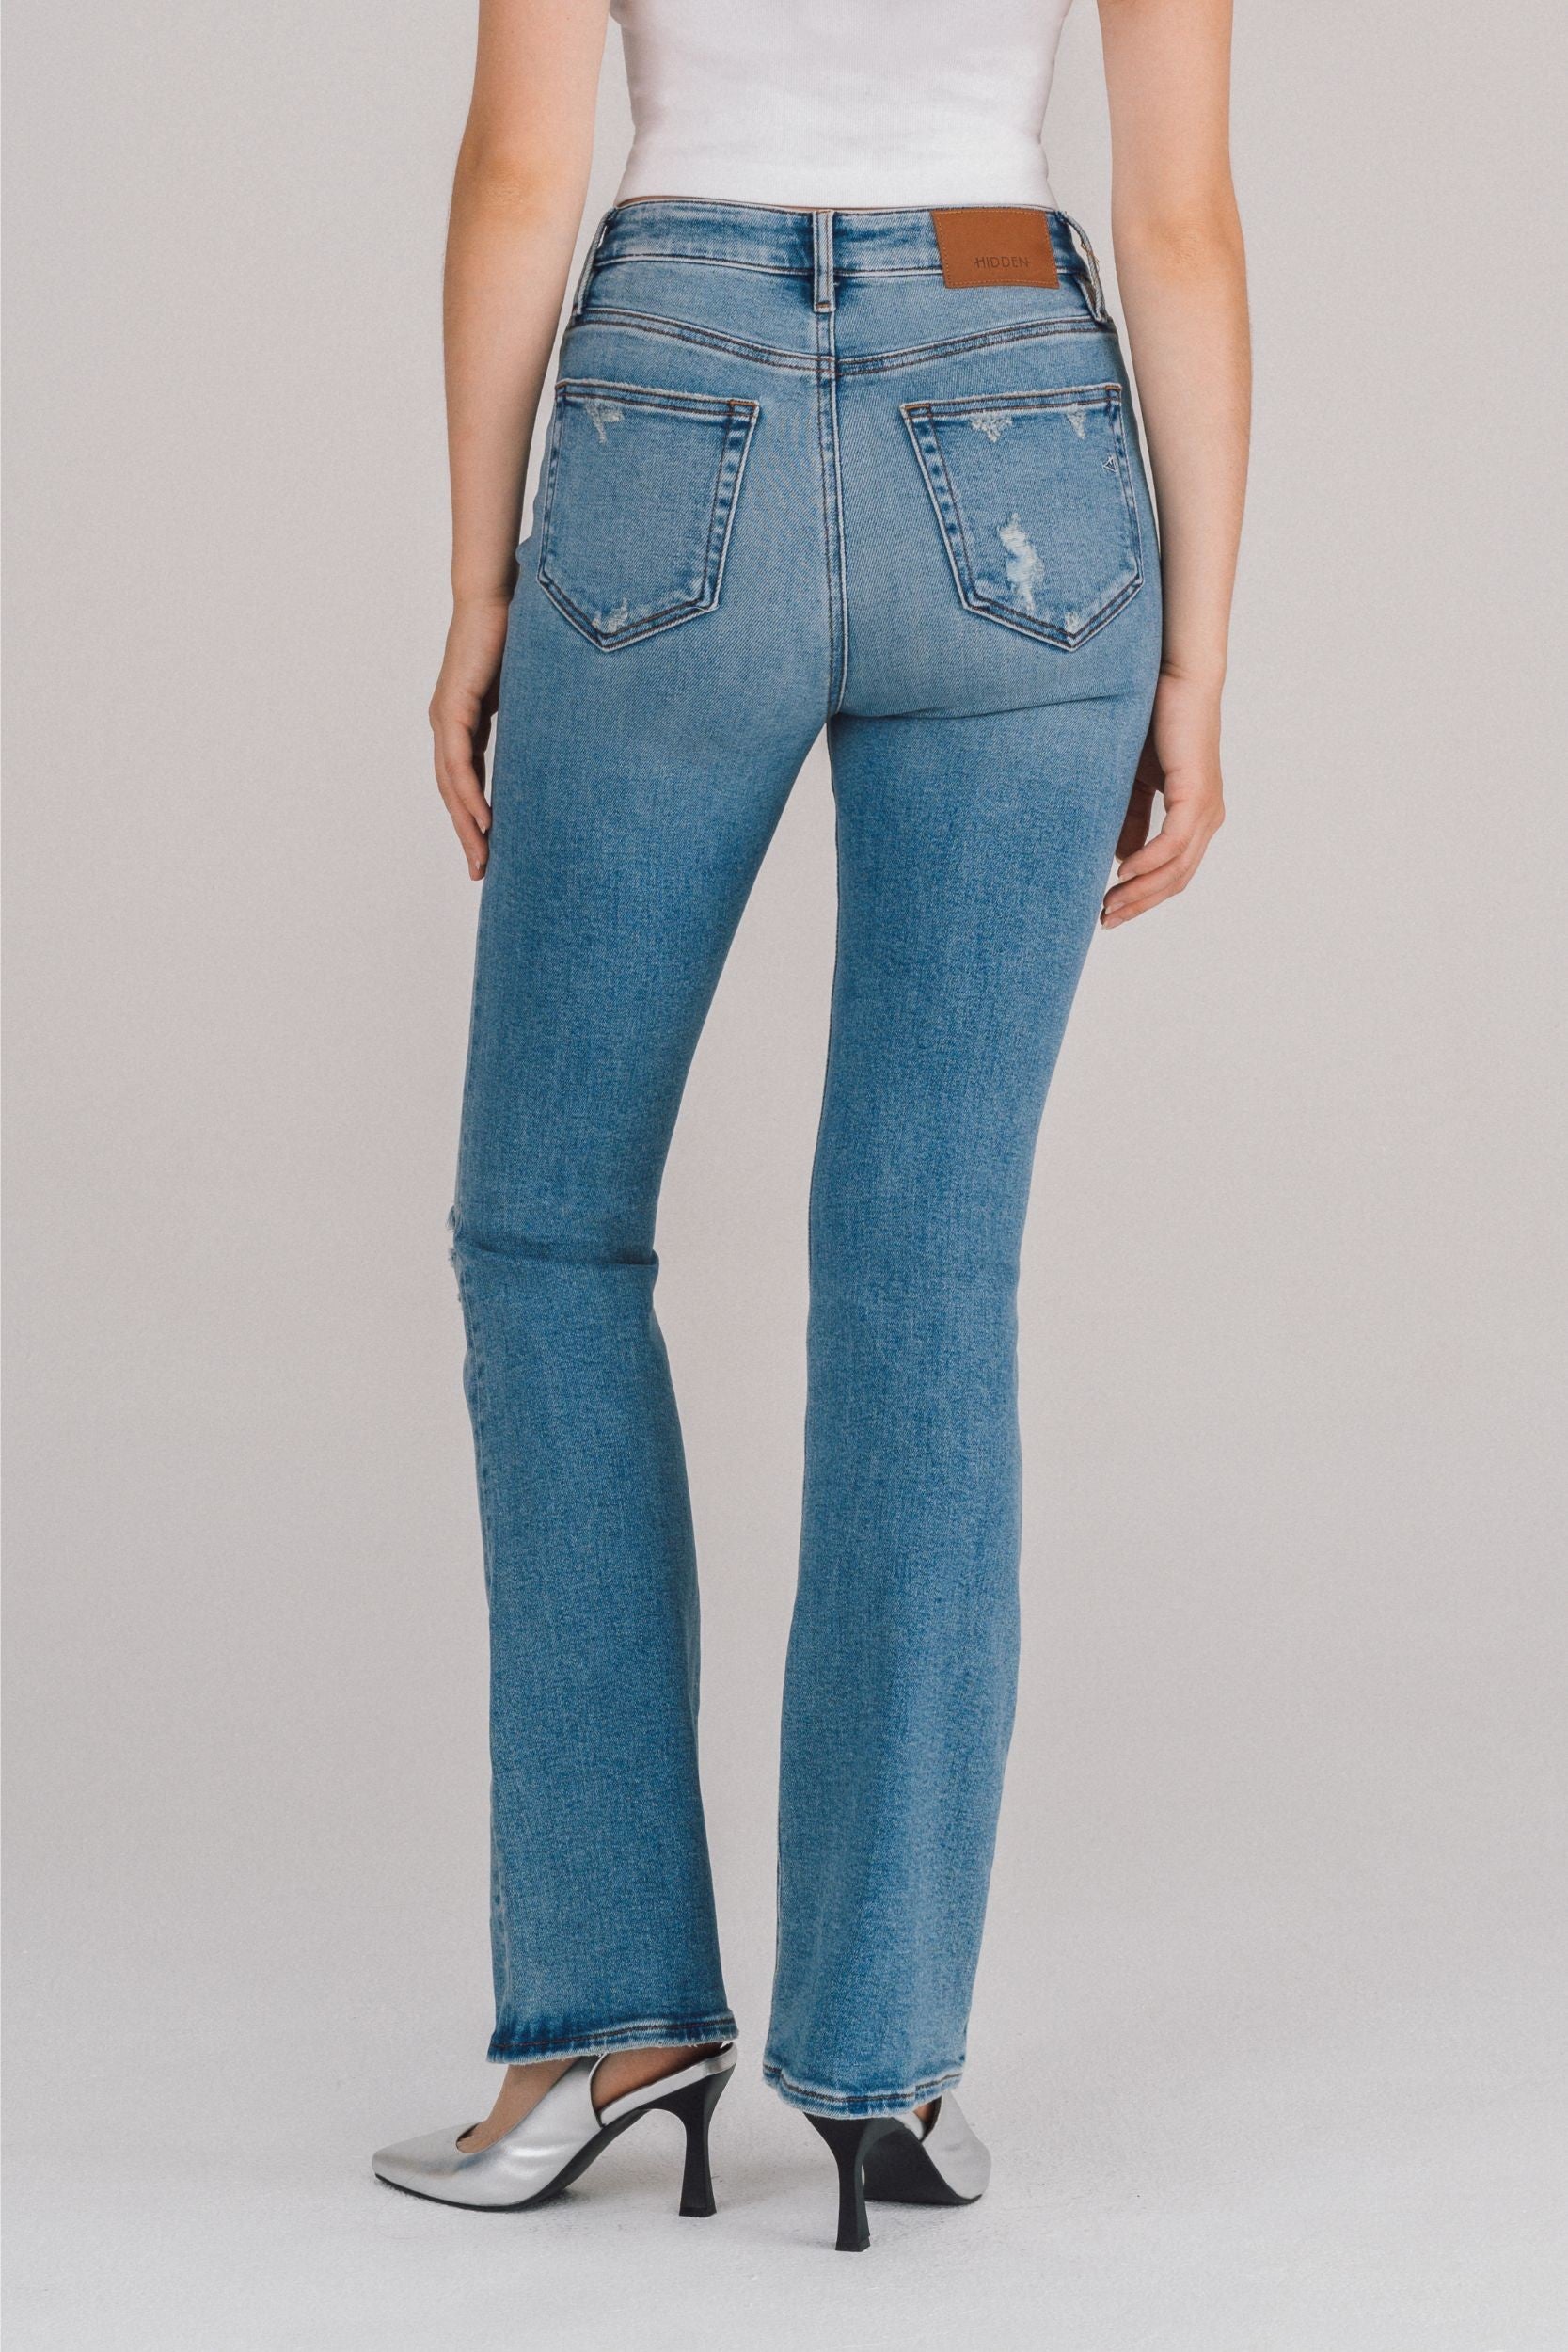 Hidden Jeans Vintage Grinded 32in Inseam Stretch Bootcut